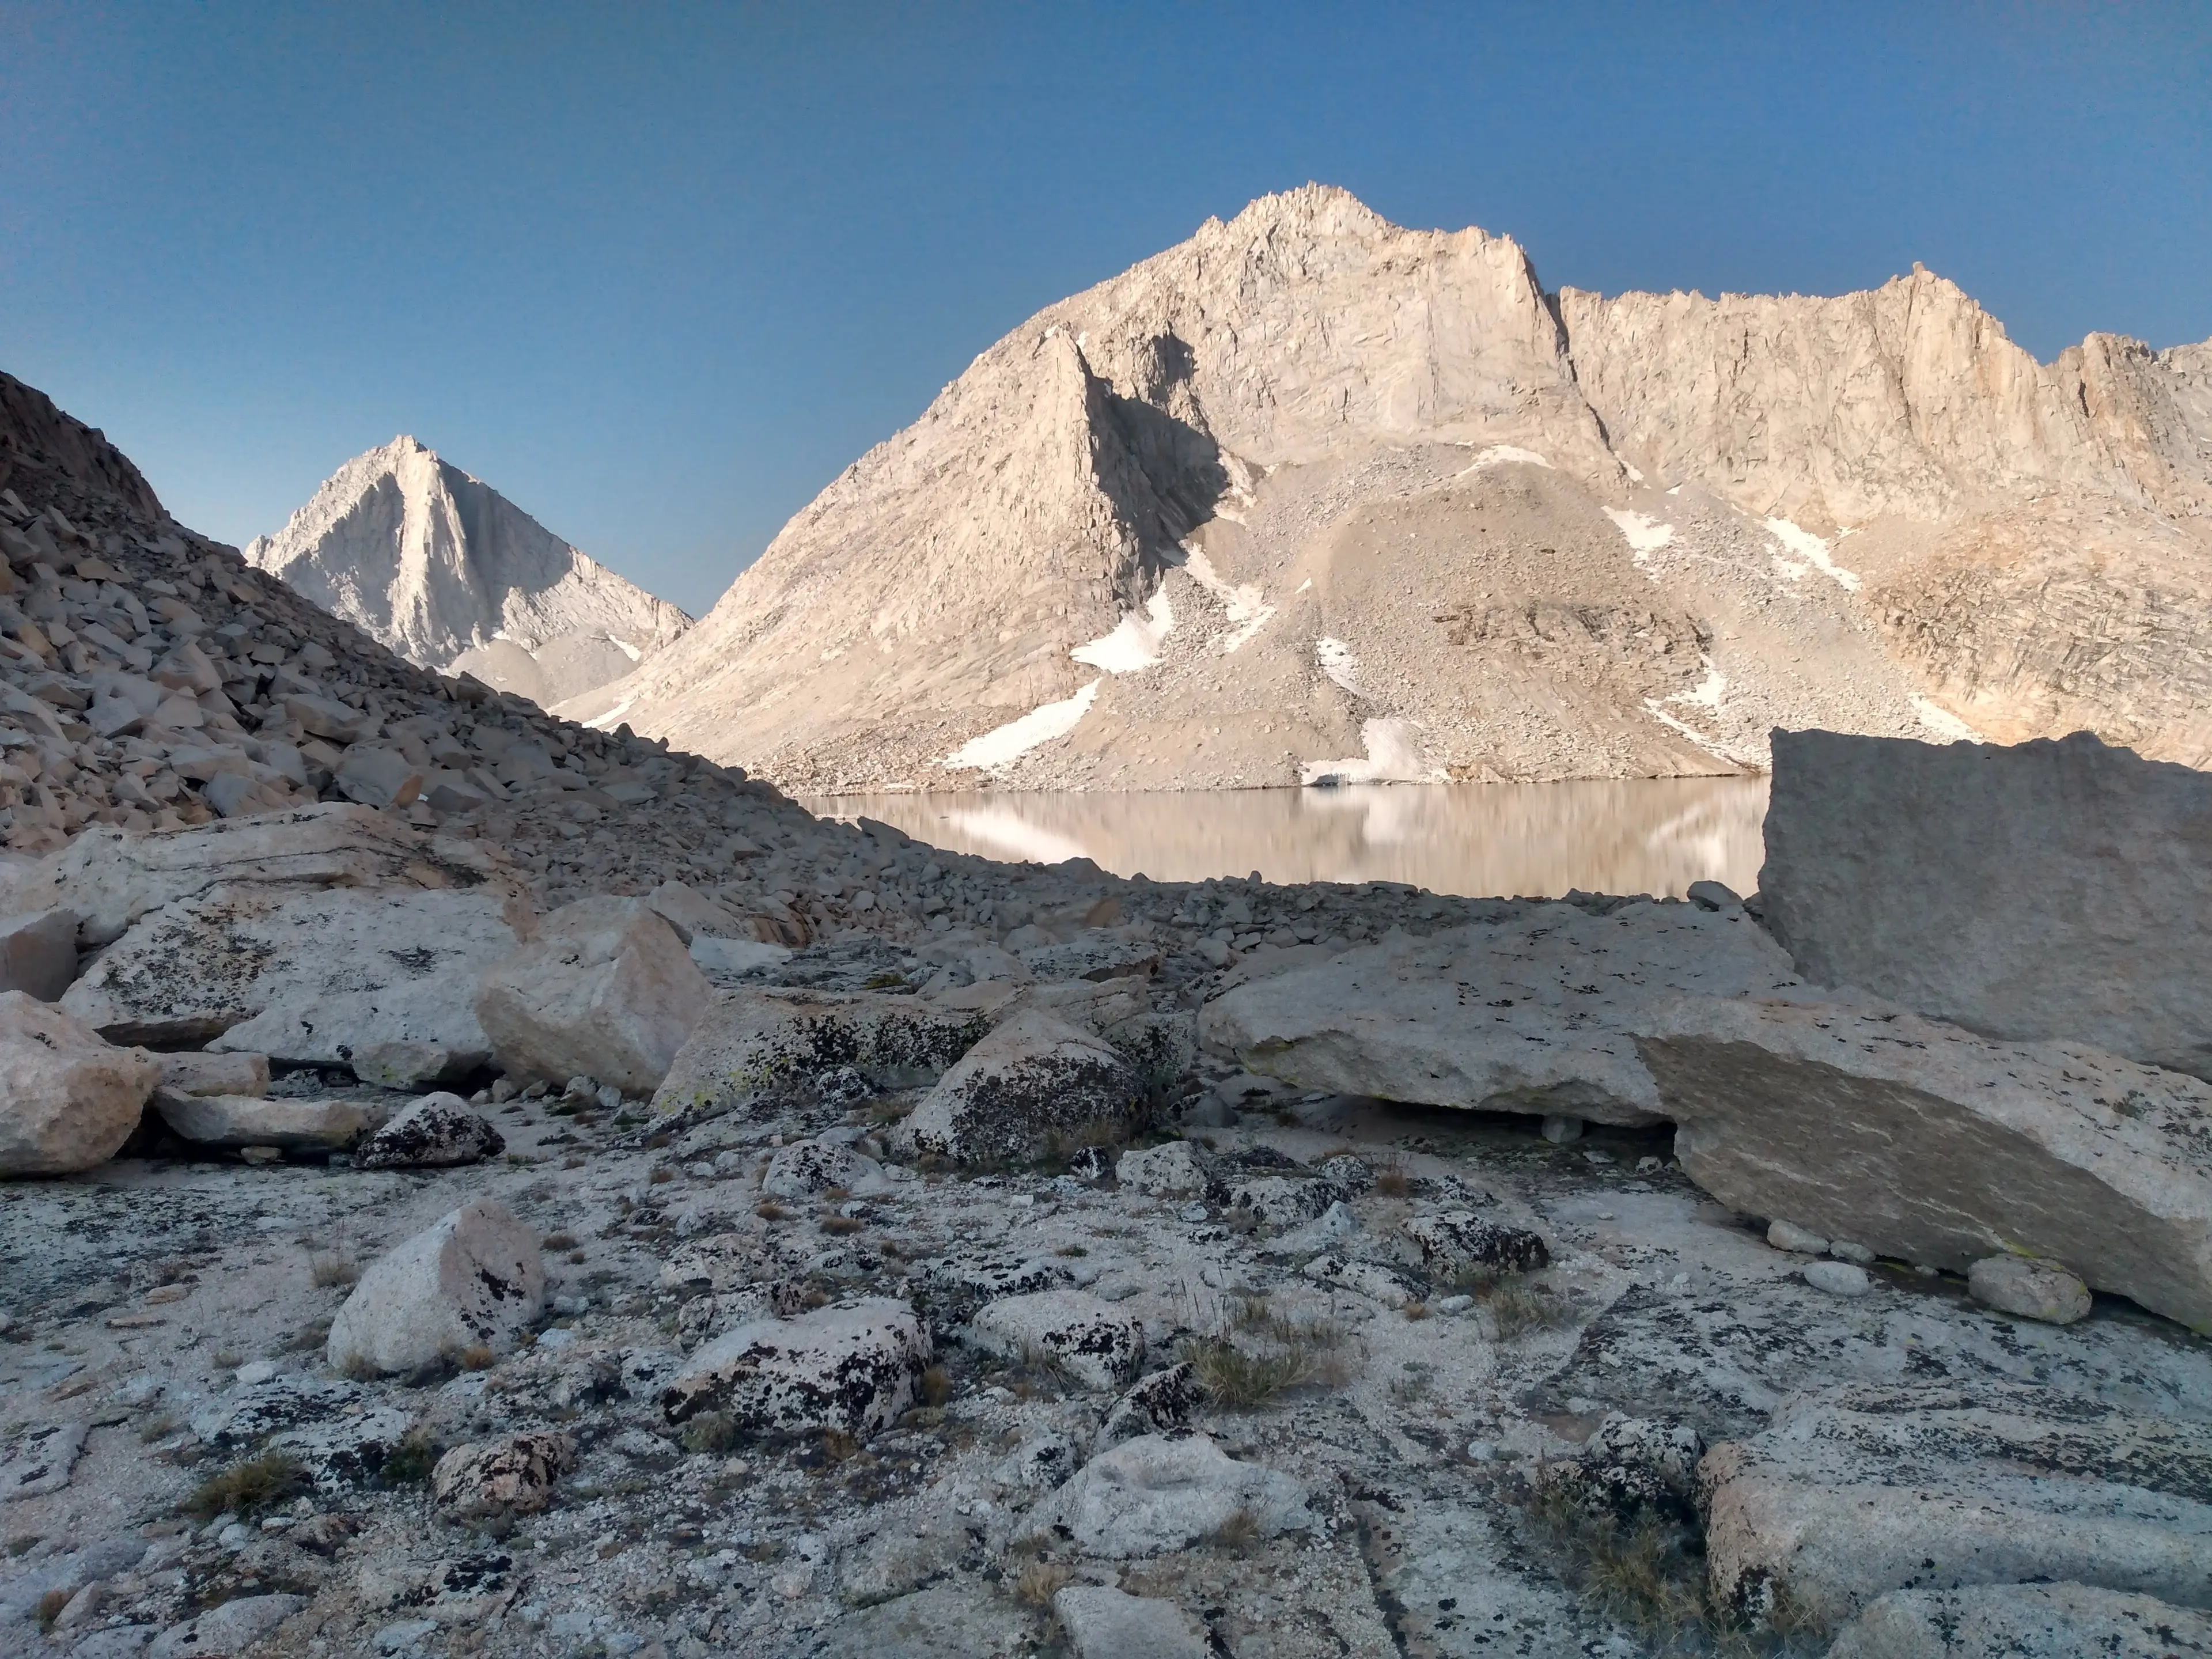 Merriam Peak (L) and Royce Peak (R)